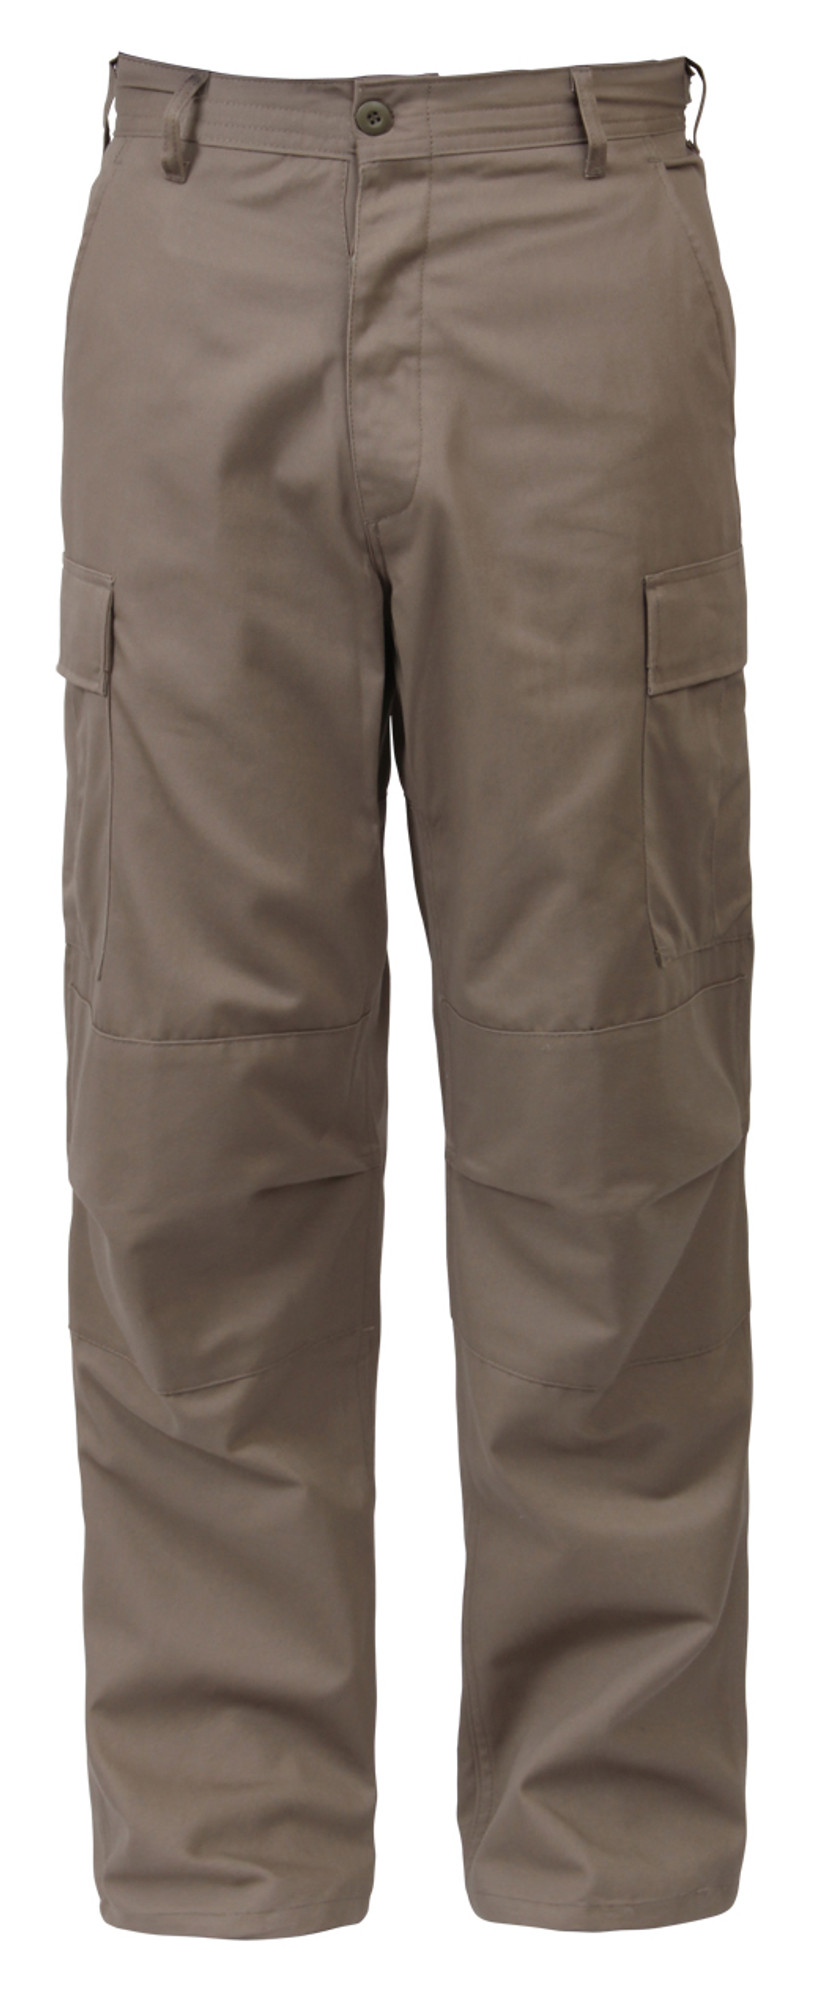 Rothco Tactical BDU Cargo Pants - Khaki